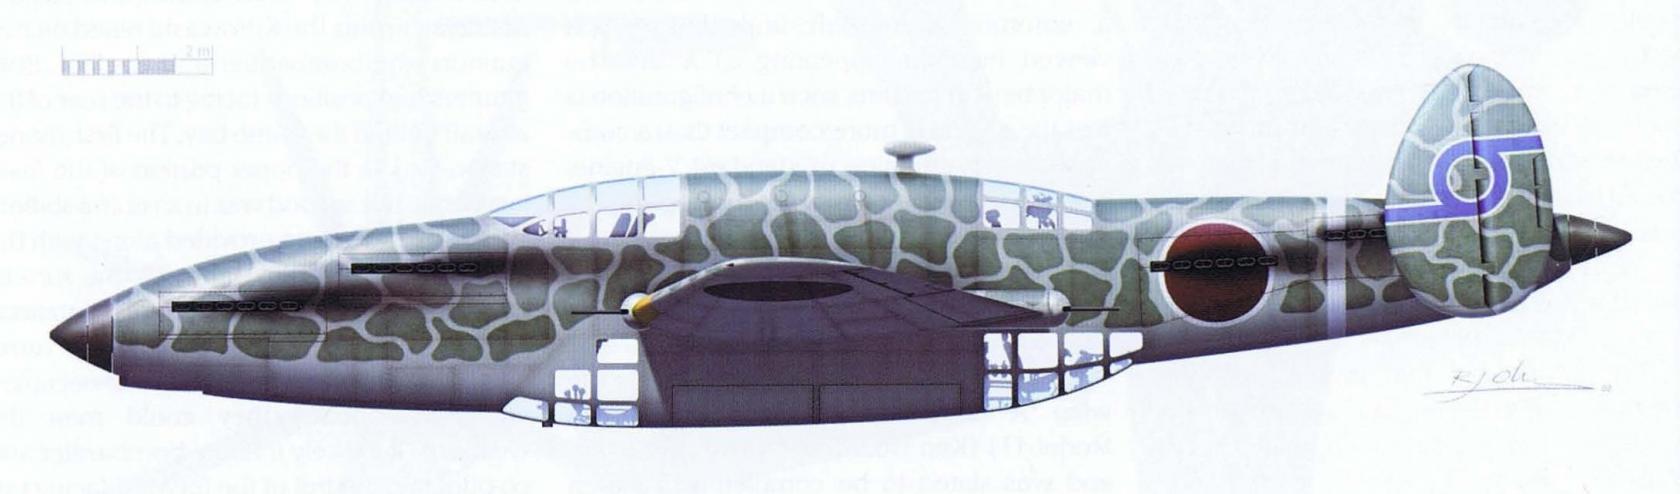 Призраки «Неба». Проект тяжелого бомбардировщика S-31 Kurowashi. Япония